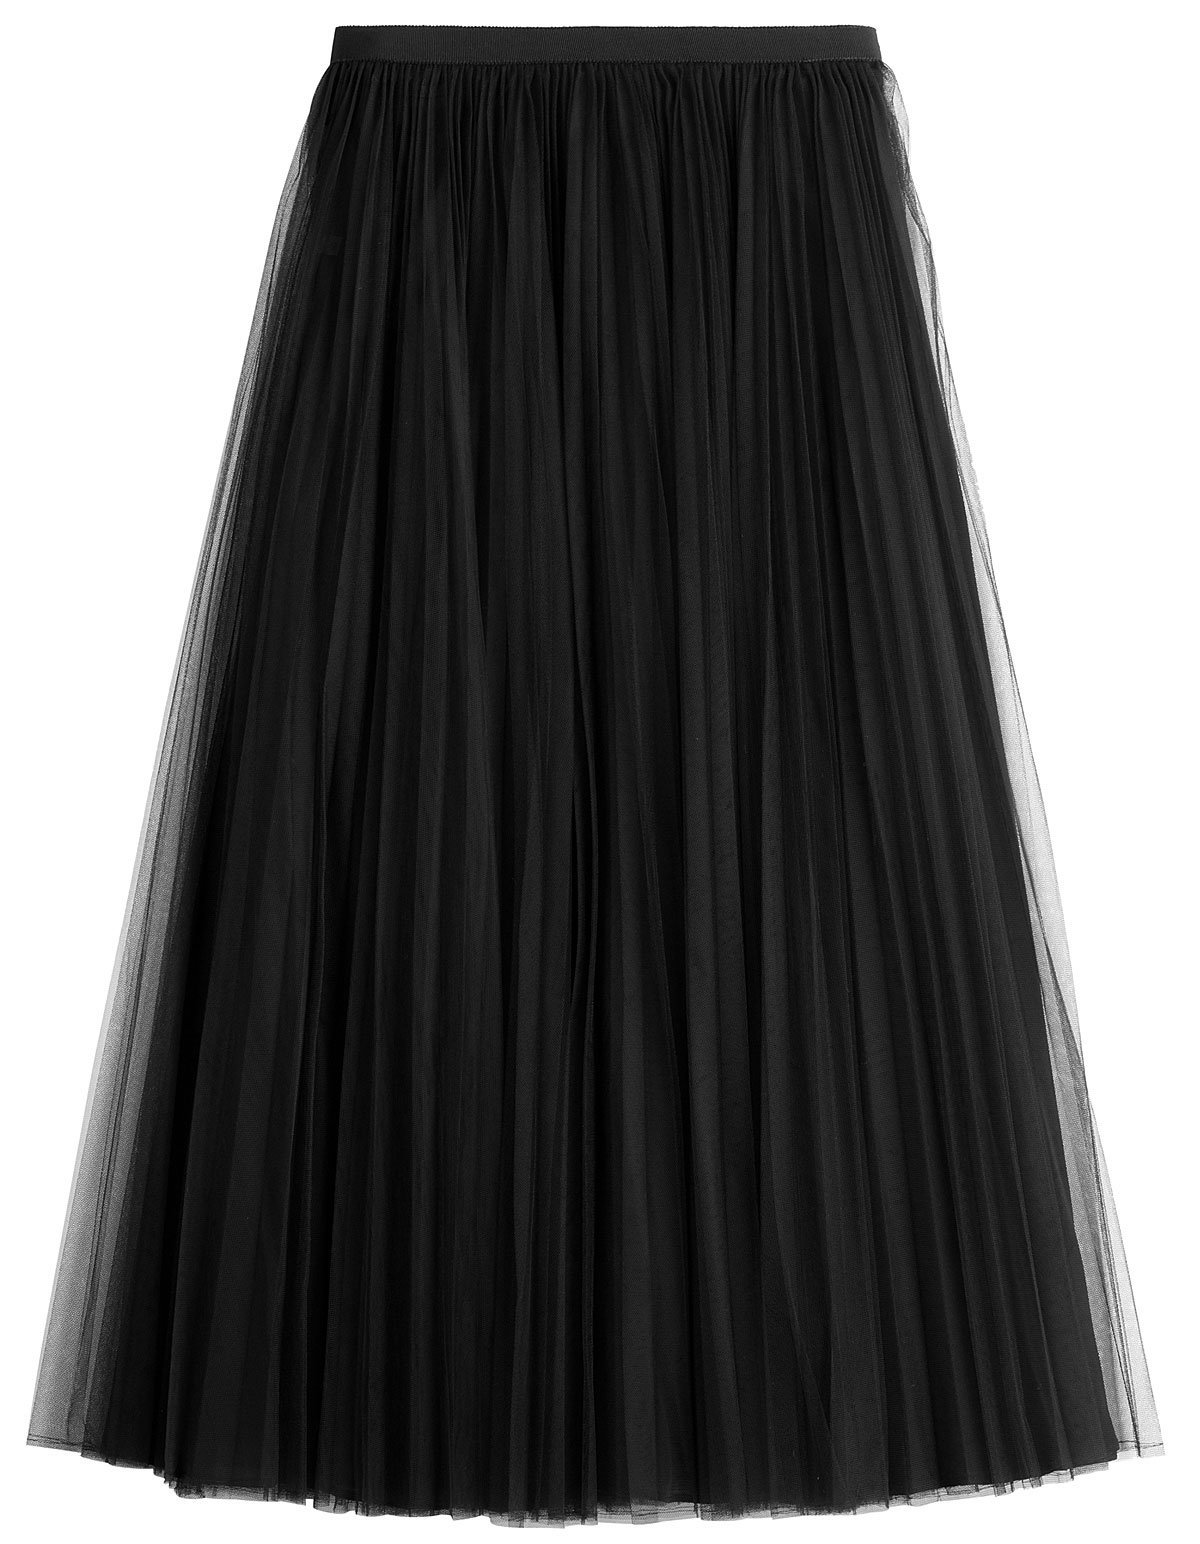 Valentino black tulle midi skirt 3439